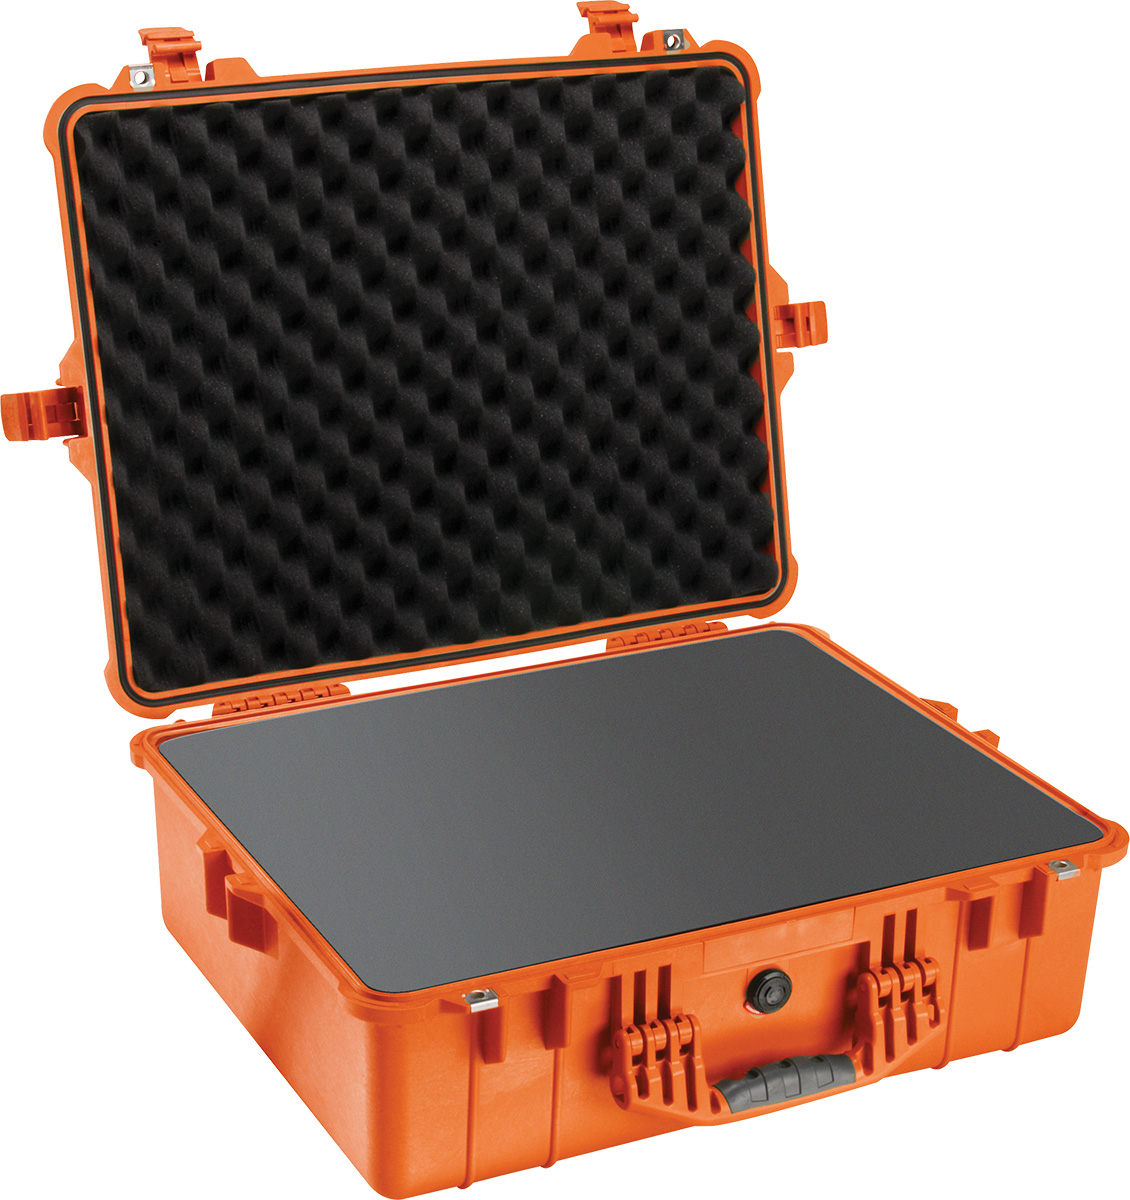 Protector Case 1600EU oranžový s pěnou